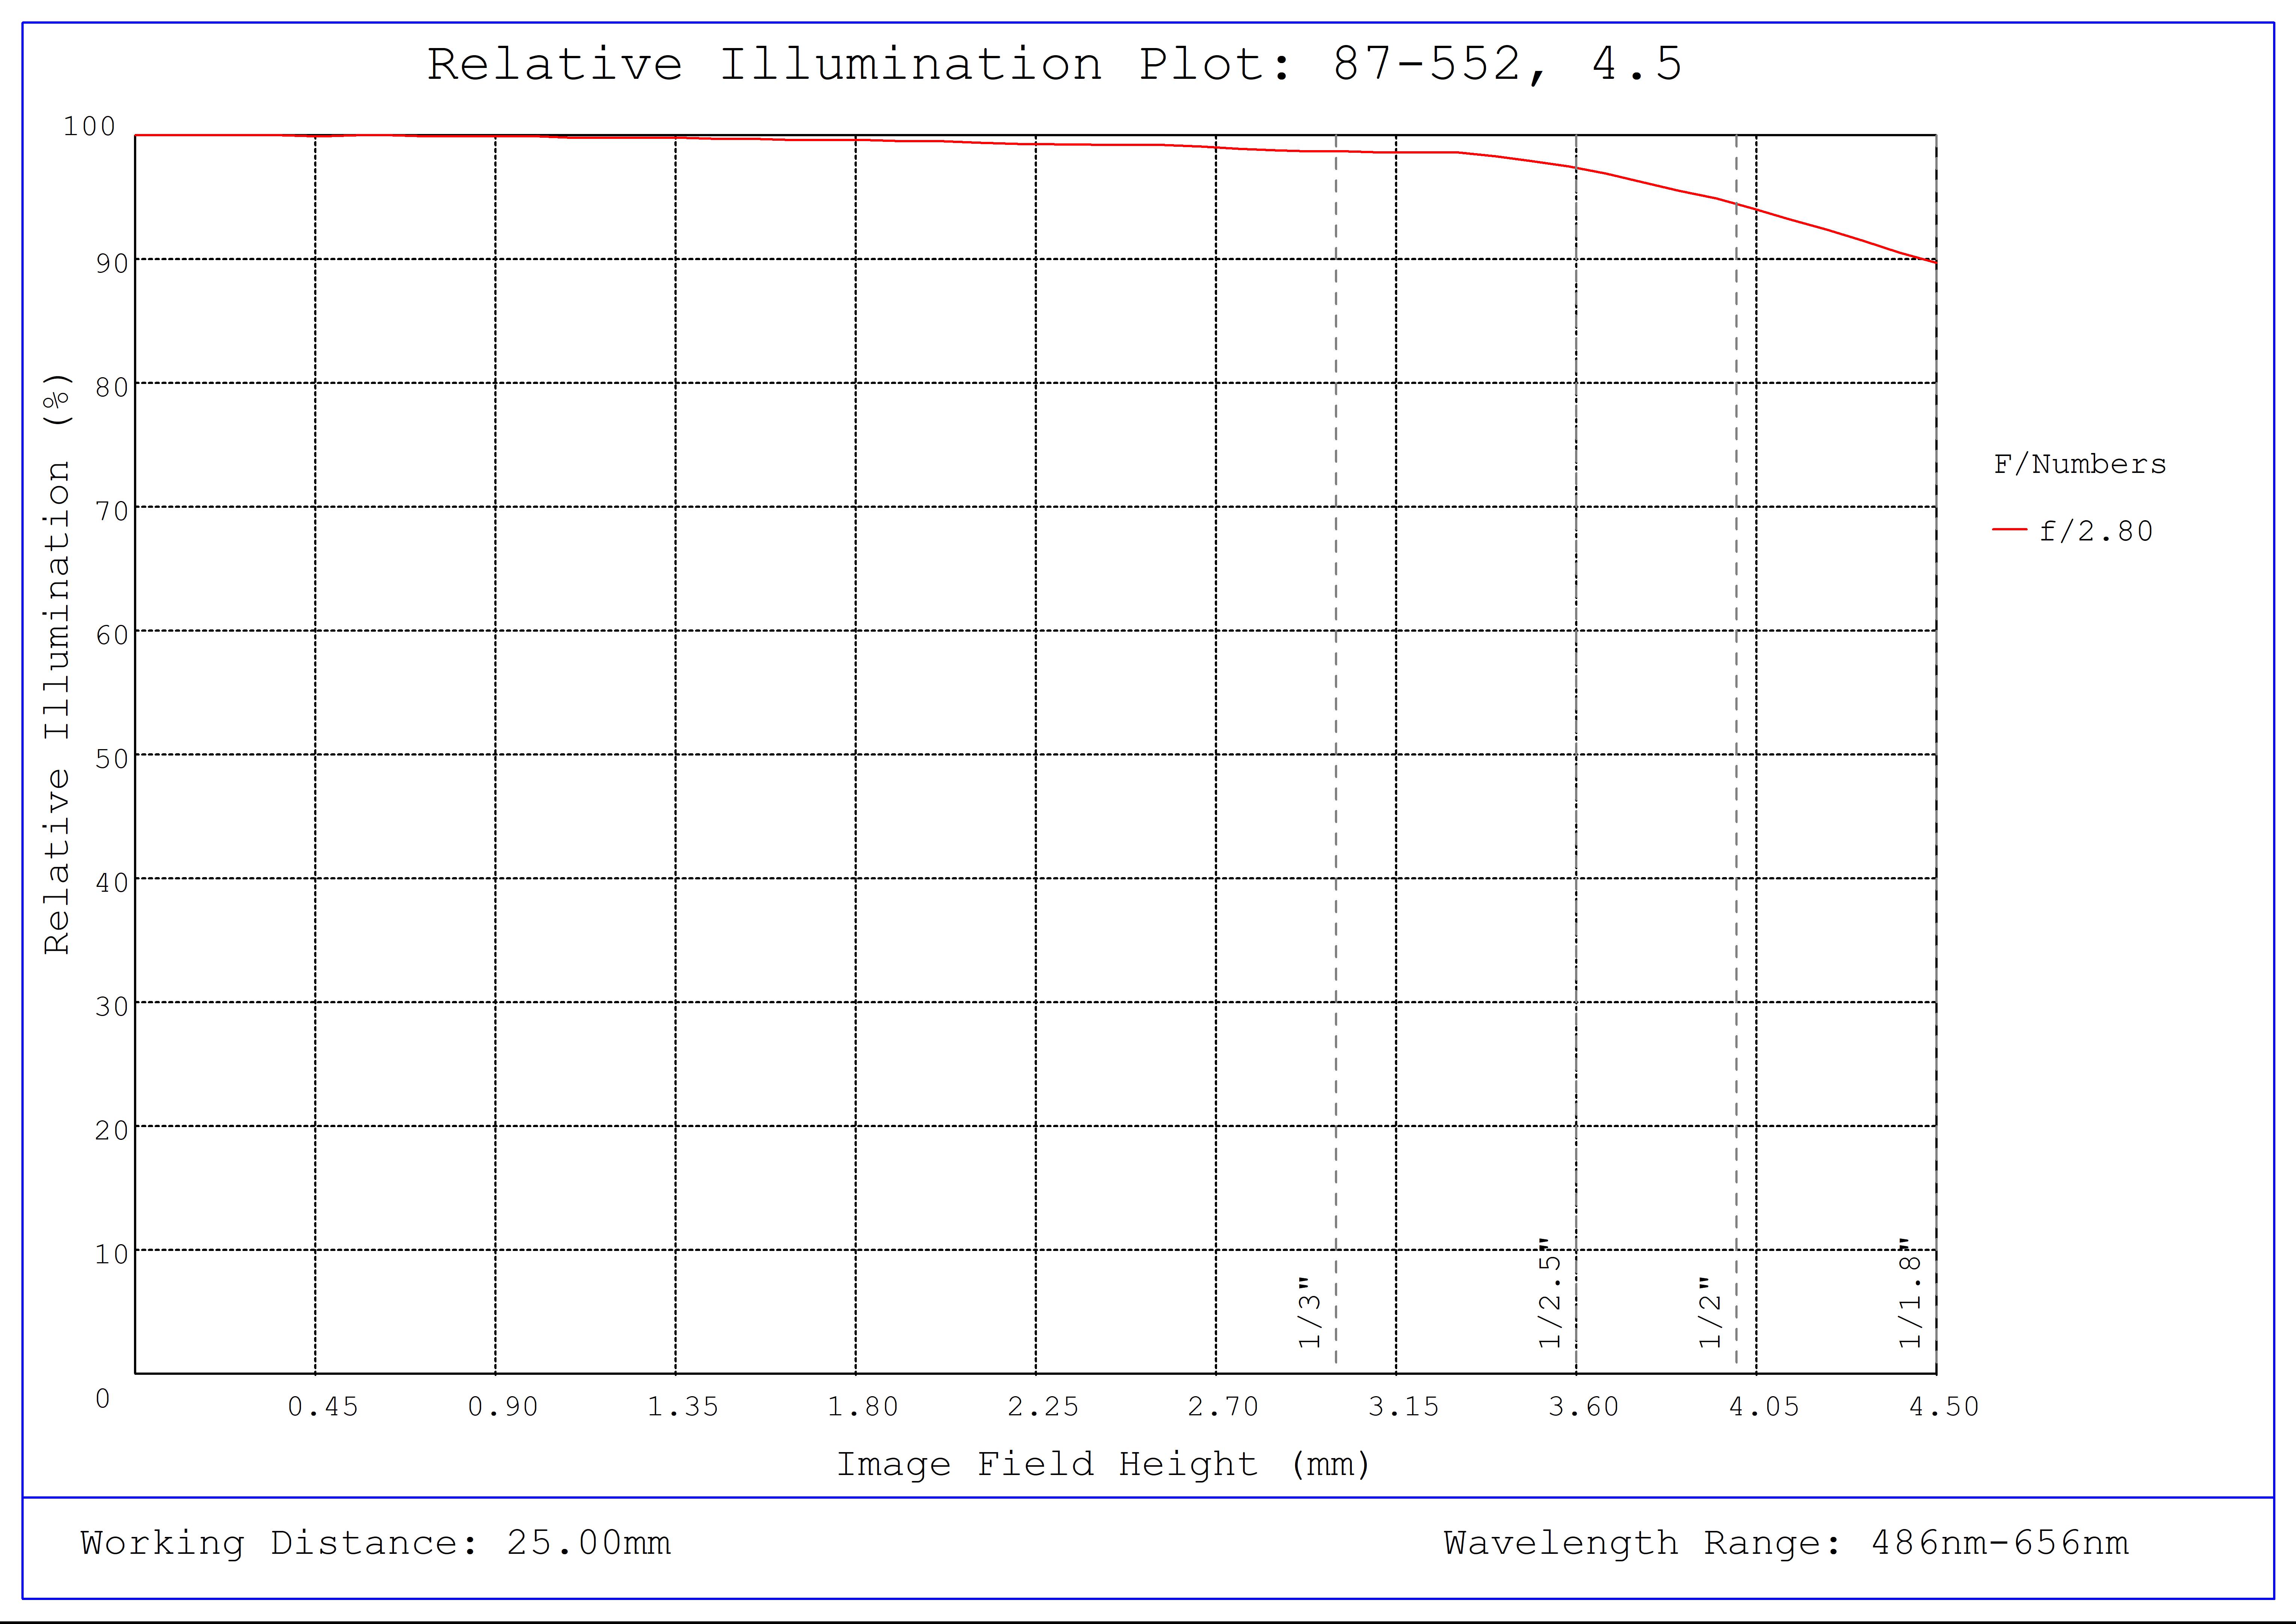 #87-552, 4.5mm, f/2.8 Ci Series Fixed Focal Length Lens, Relative Illumination Plot